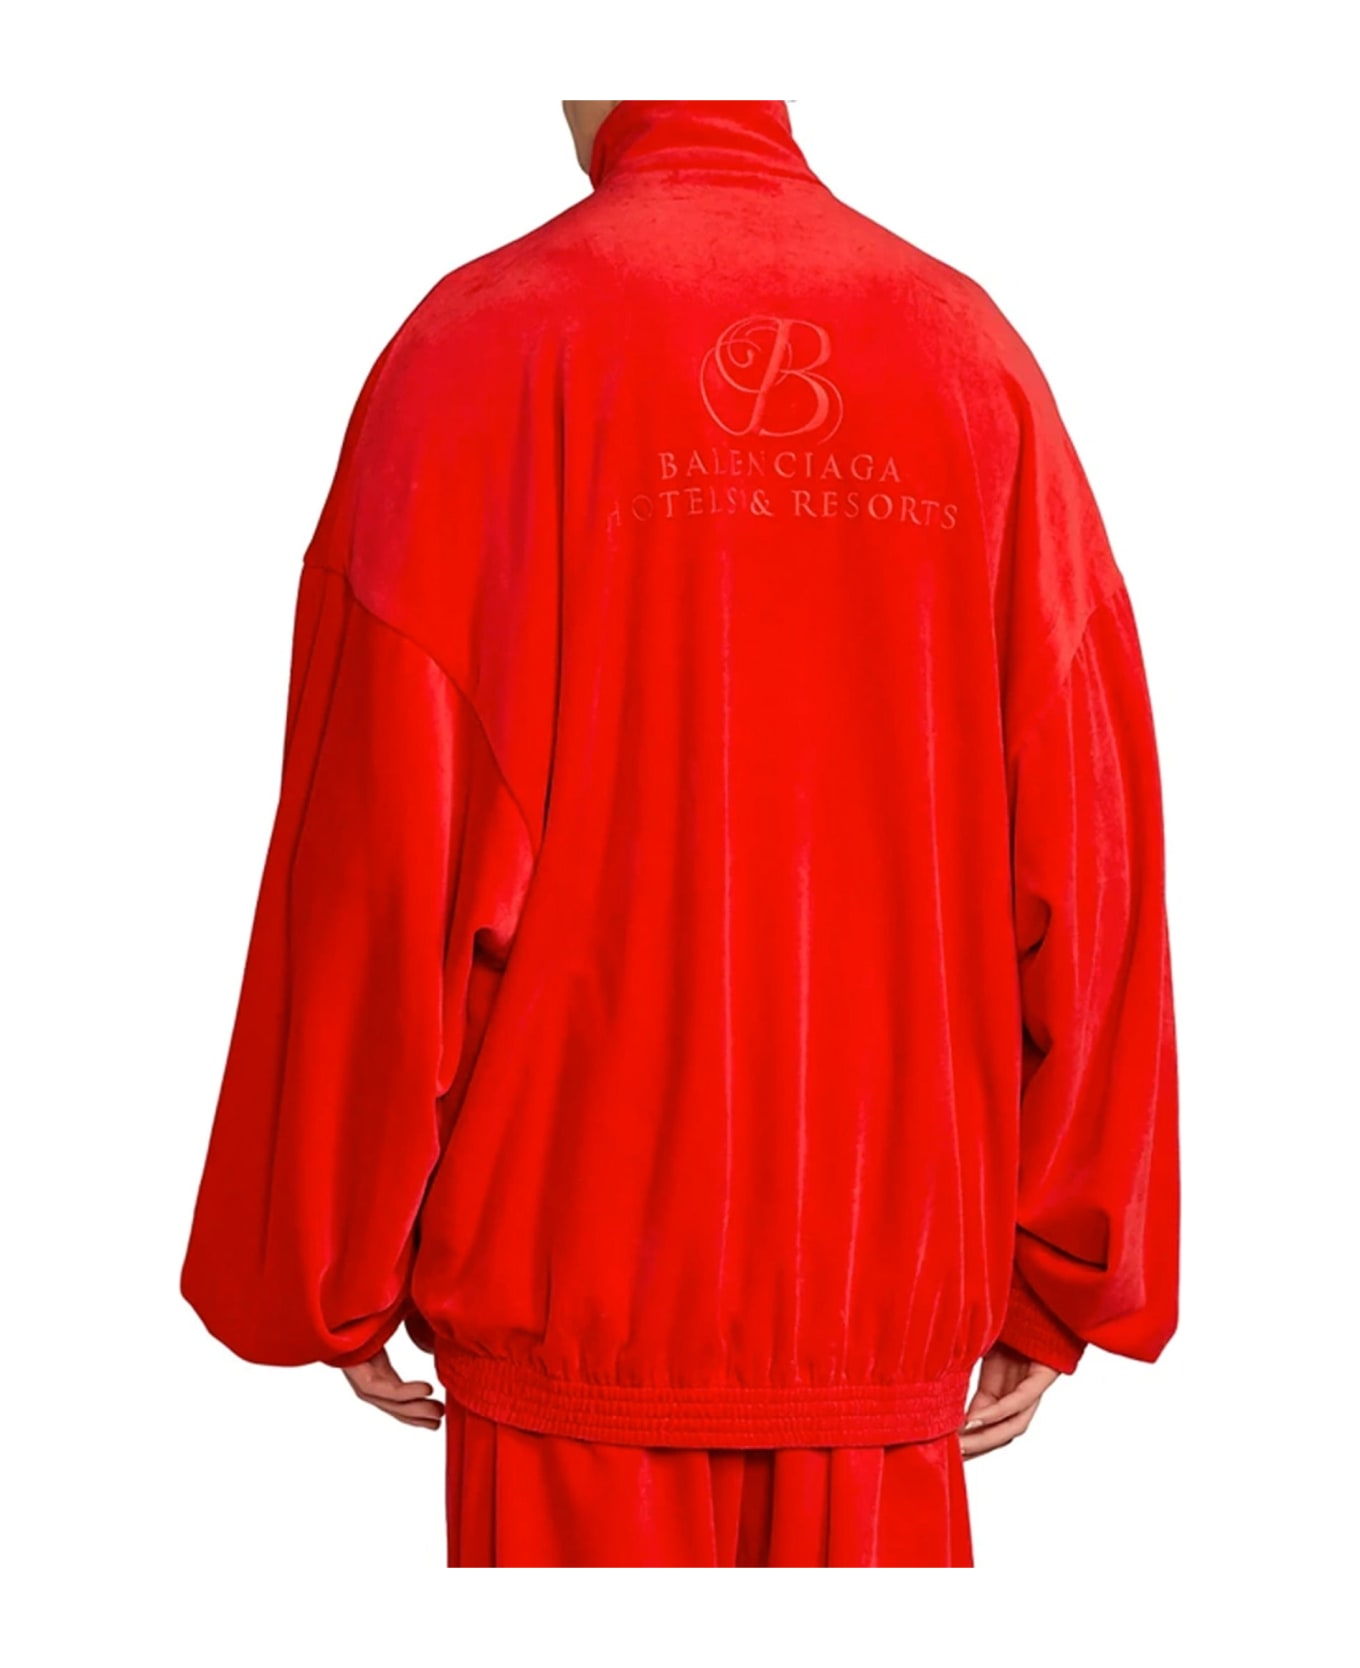 Balenciaga Velvet Effect Sweatshirt - Red